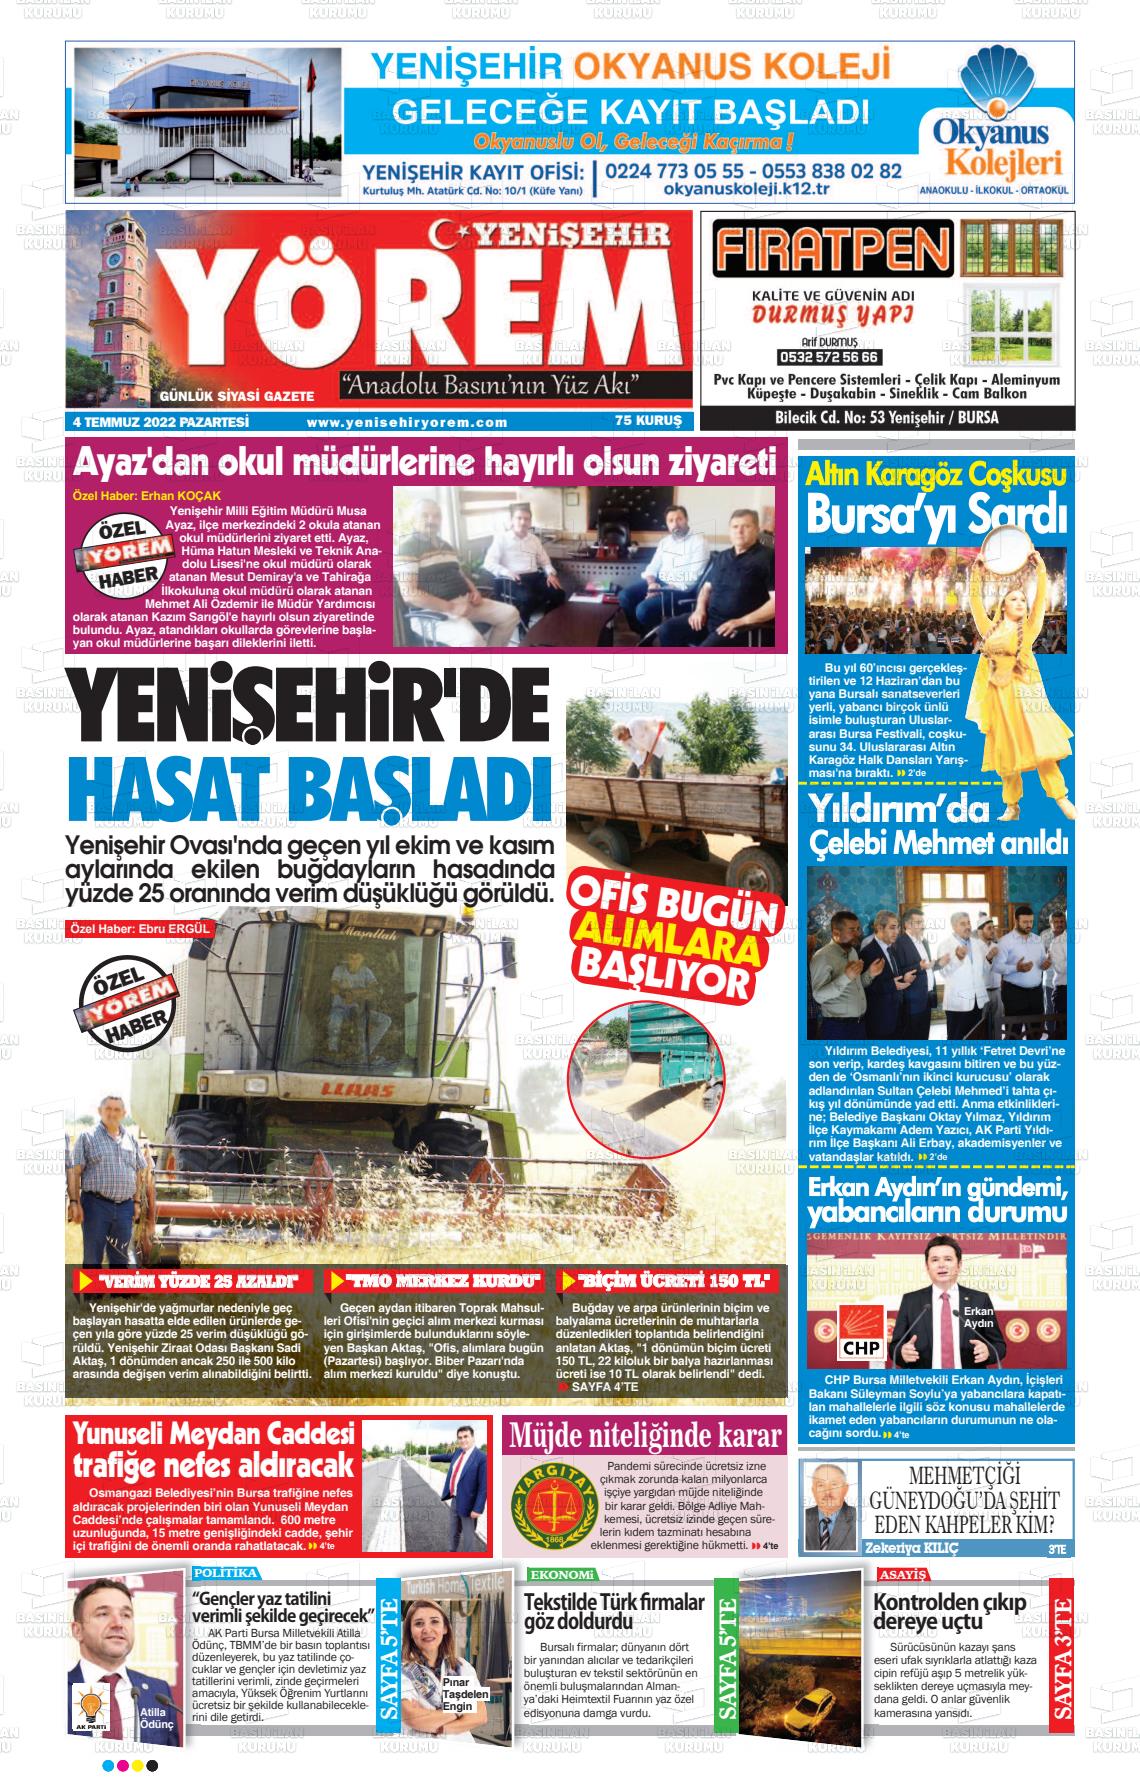 04 Temmuz 2022 Yenişehir Yörem Gazete Manşeti